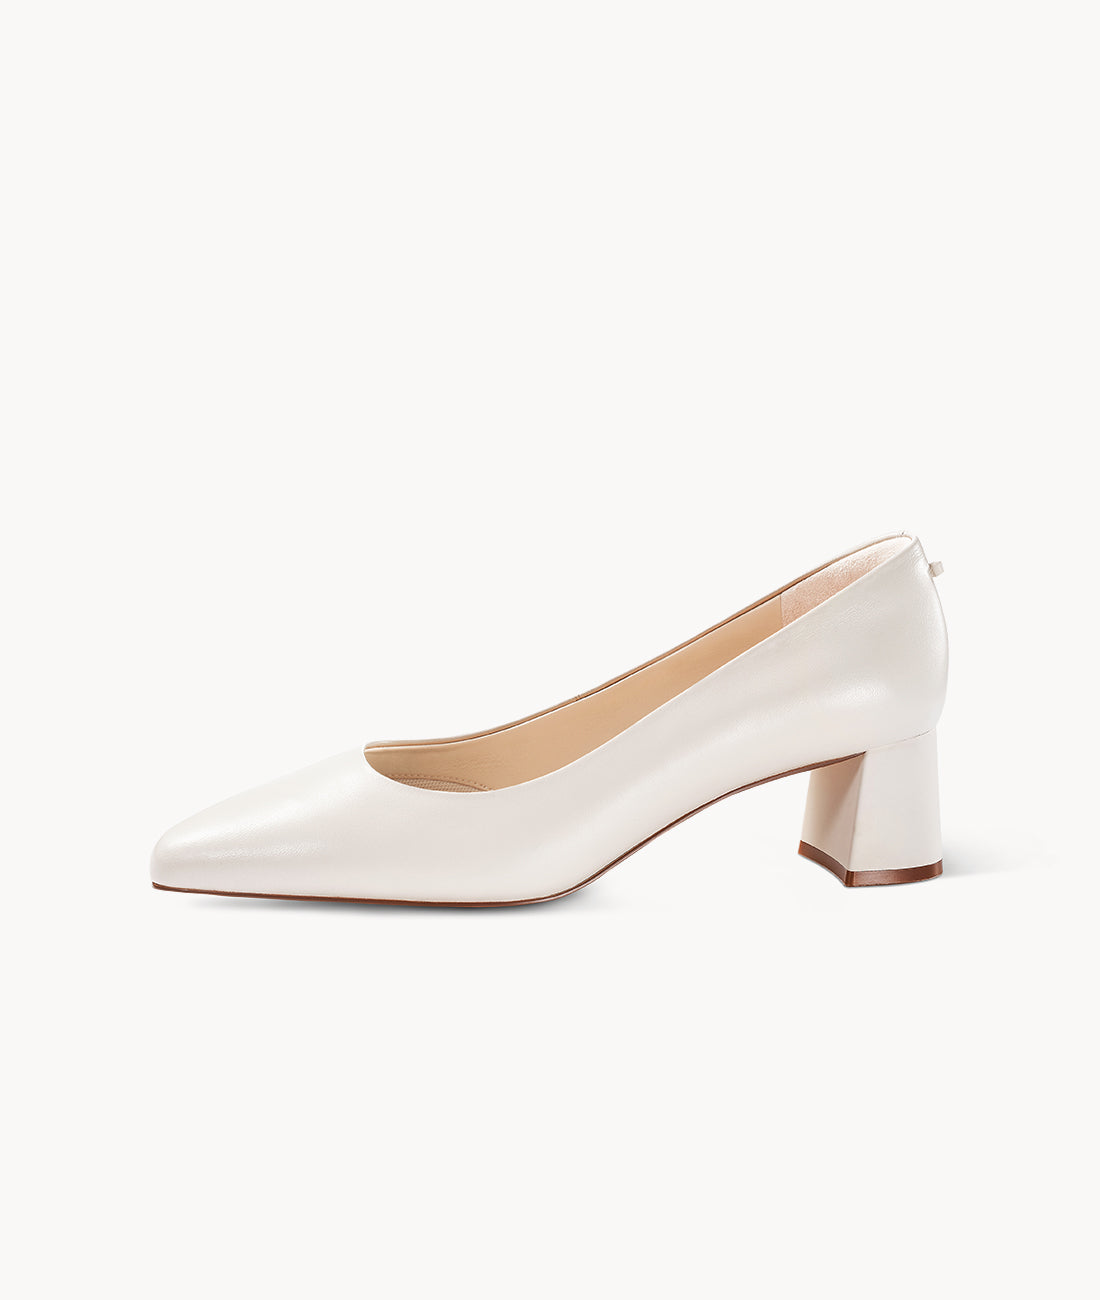 White round-toe heels